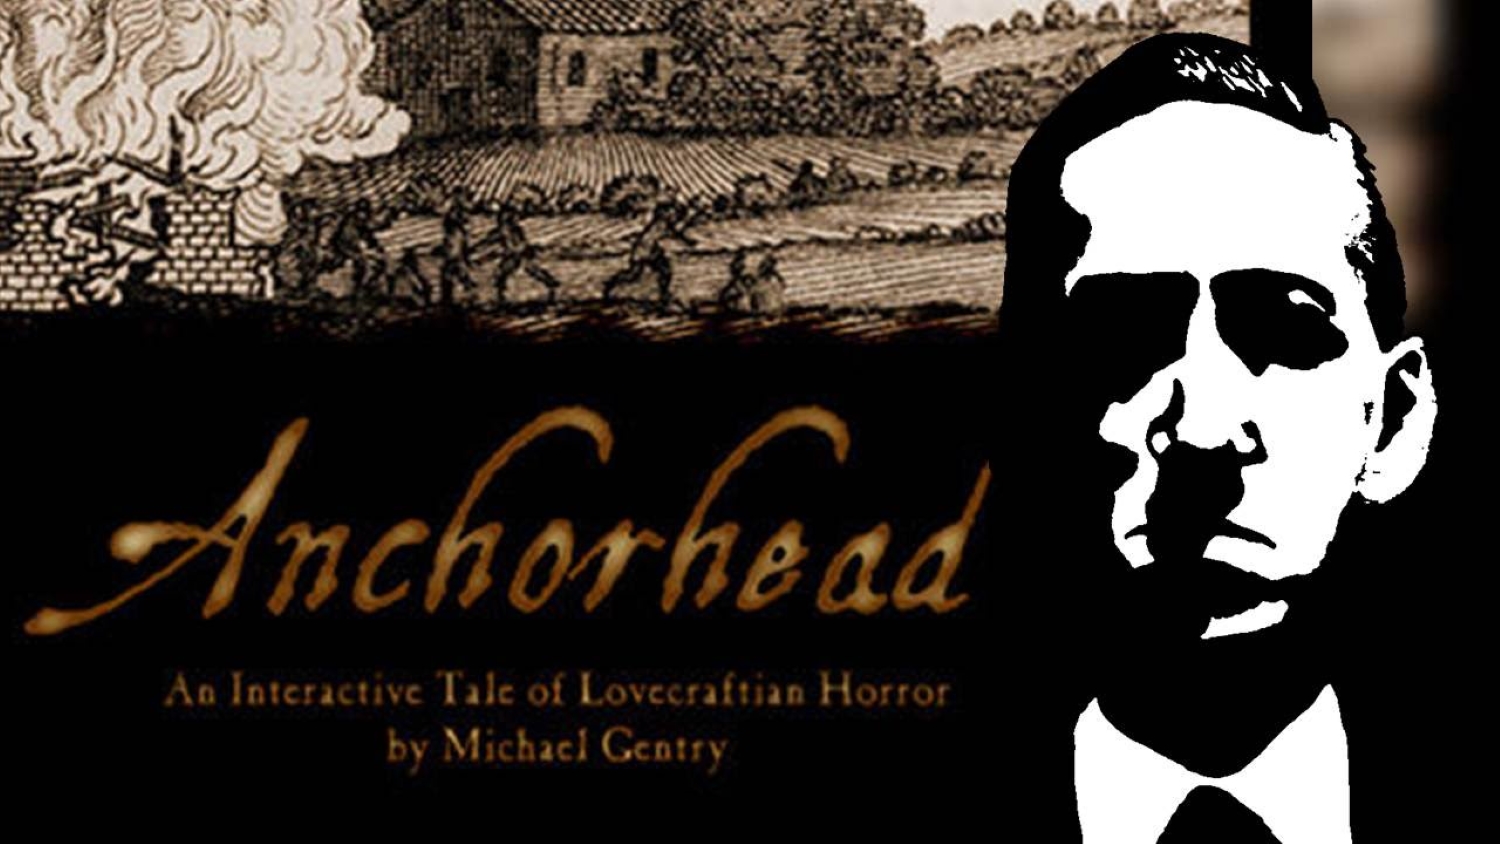 anchorhead game